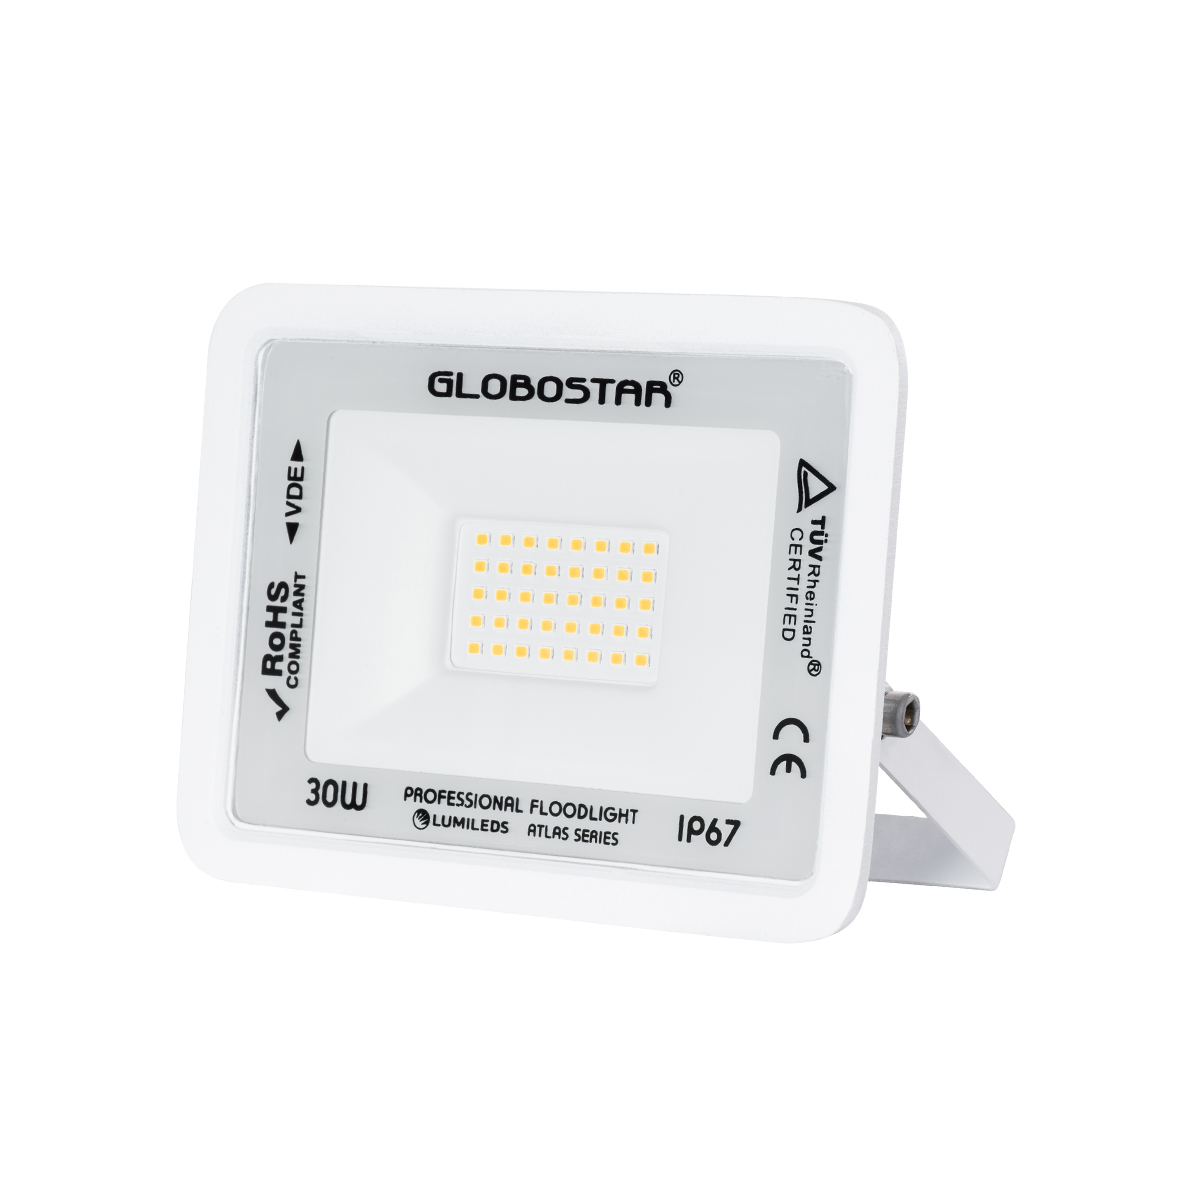 GloboStar® ATLAS 61415 Επαγγελματικός Προβολέας LED 30W 3450lm 120° AC 220-240V – Αδιάβροχος IP67 – Μ16 x Π2.5 x Υ12.5cm – Λευκό – Θερμό Λευκό 2700K – LUMILEDS Chips – TÜV Rheinland Certified – 5 Years Warranty